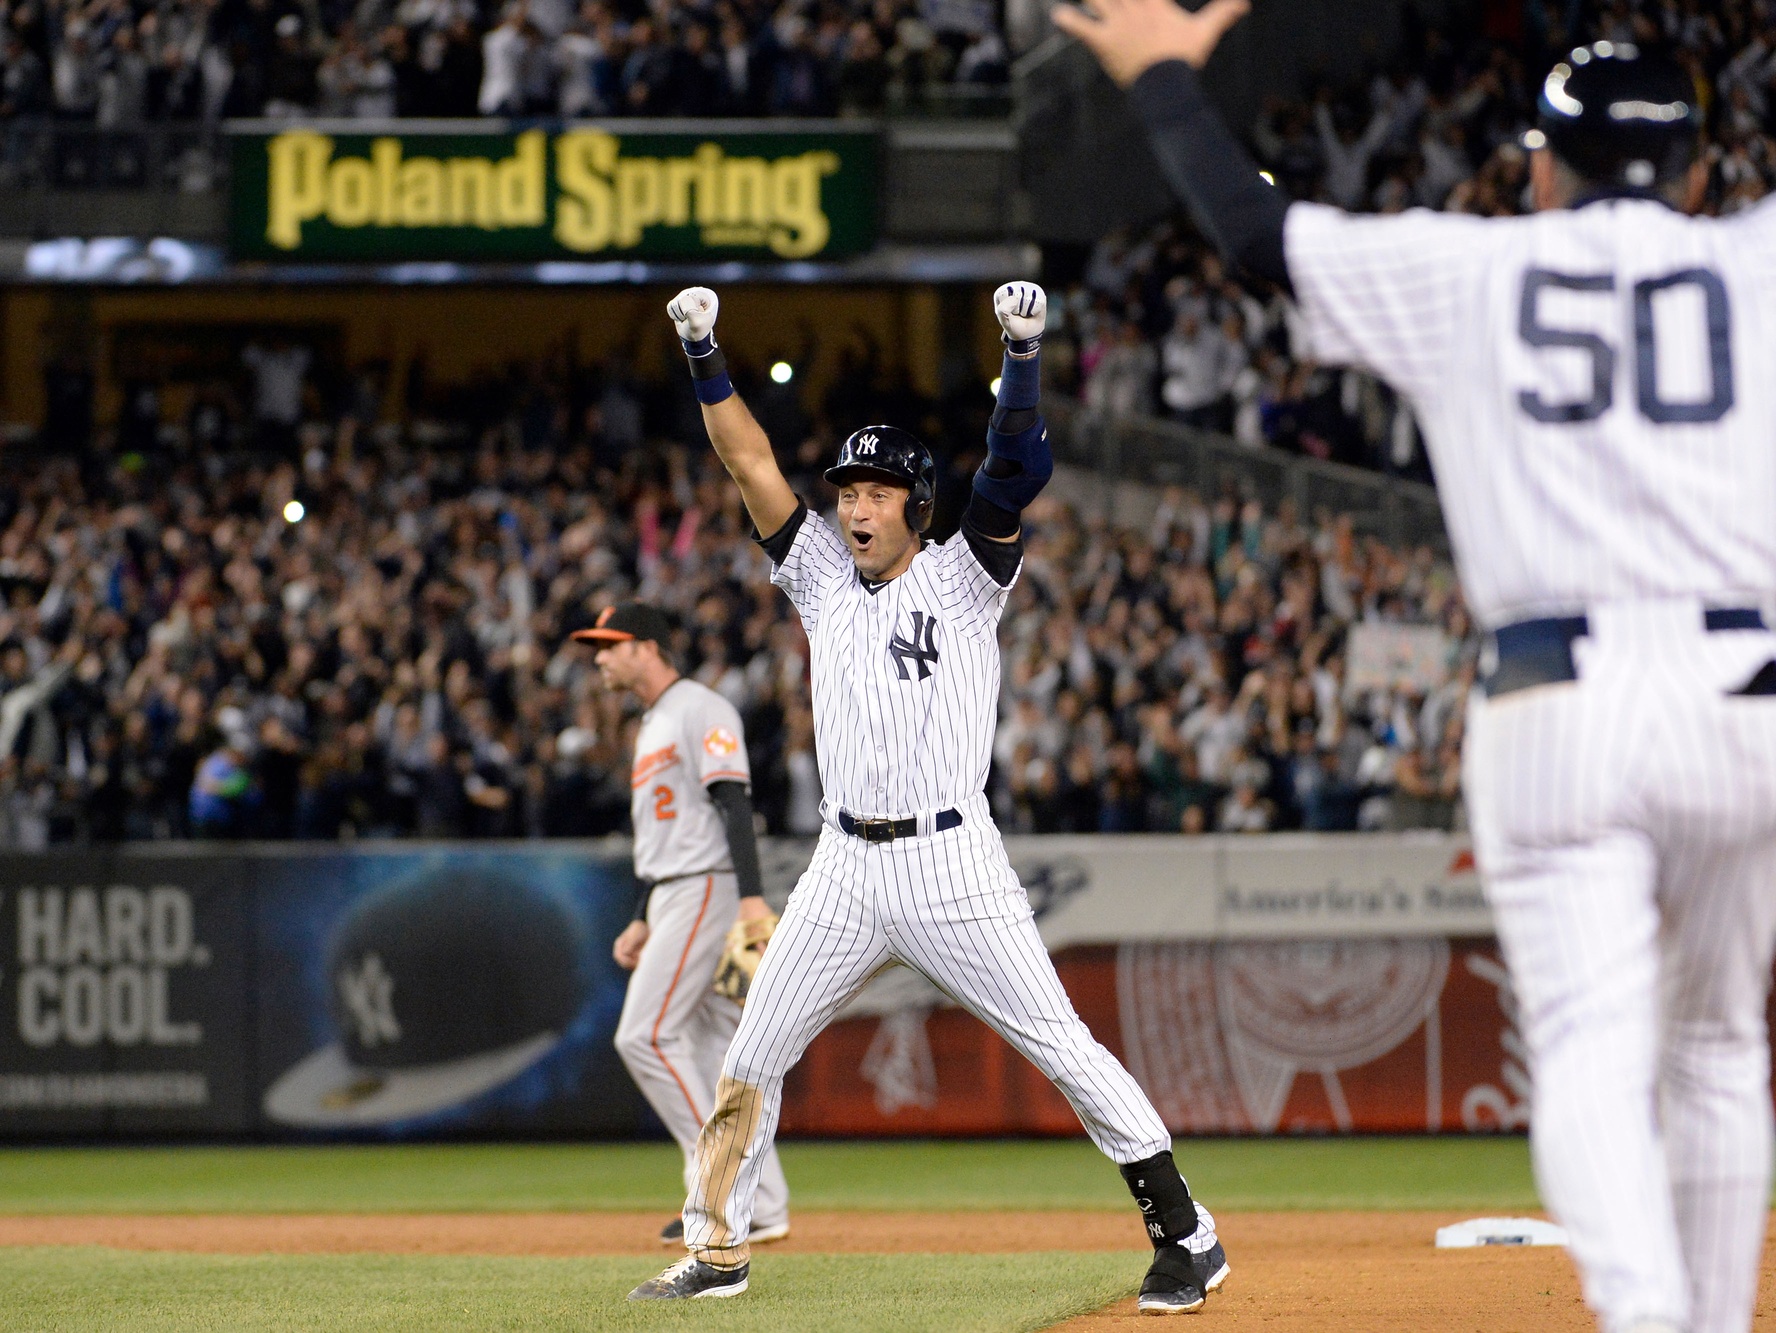 Derek Jeter Wins His Last Yankees Home Game With Walk-Off Hit